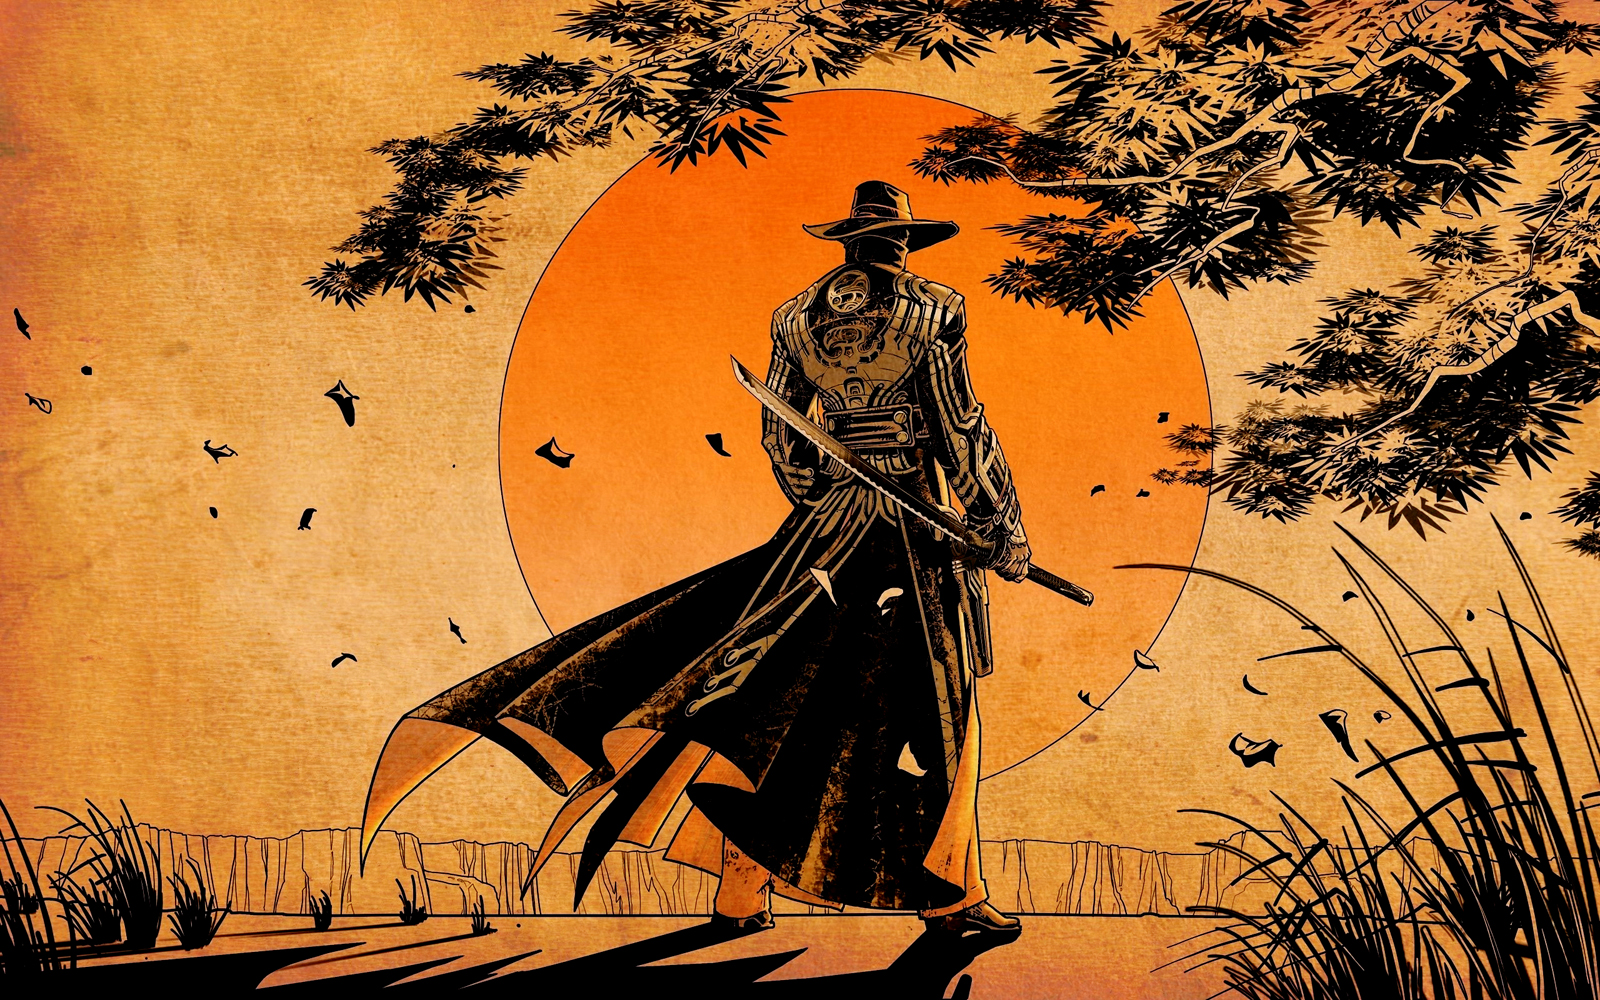 Steel Western Samurai Game Wallpaper In HD